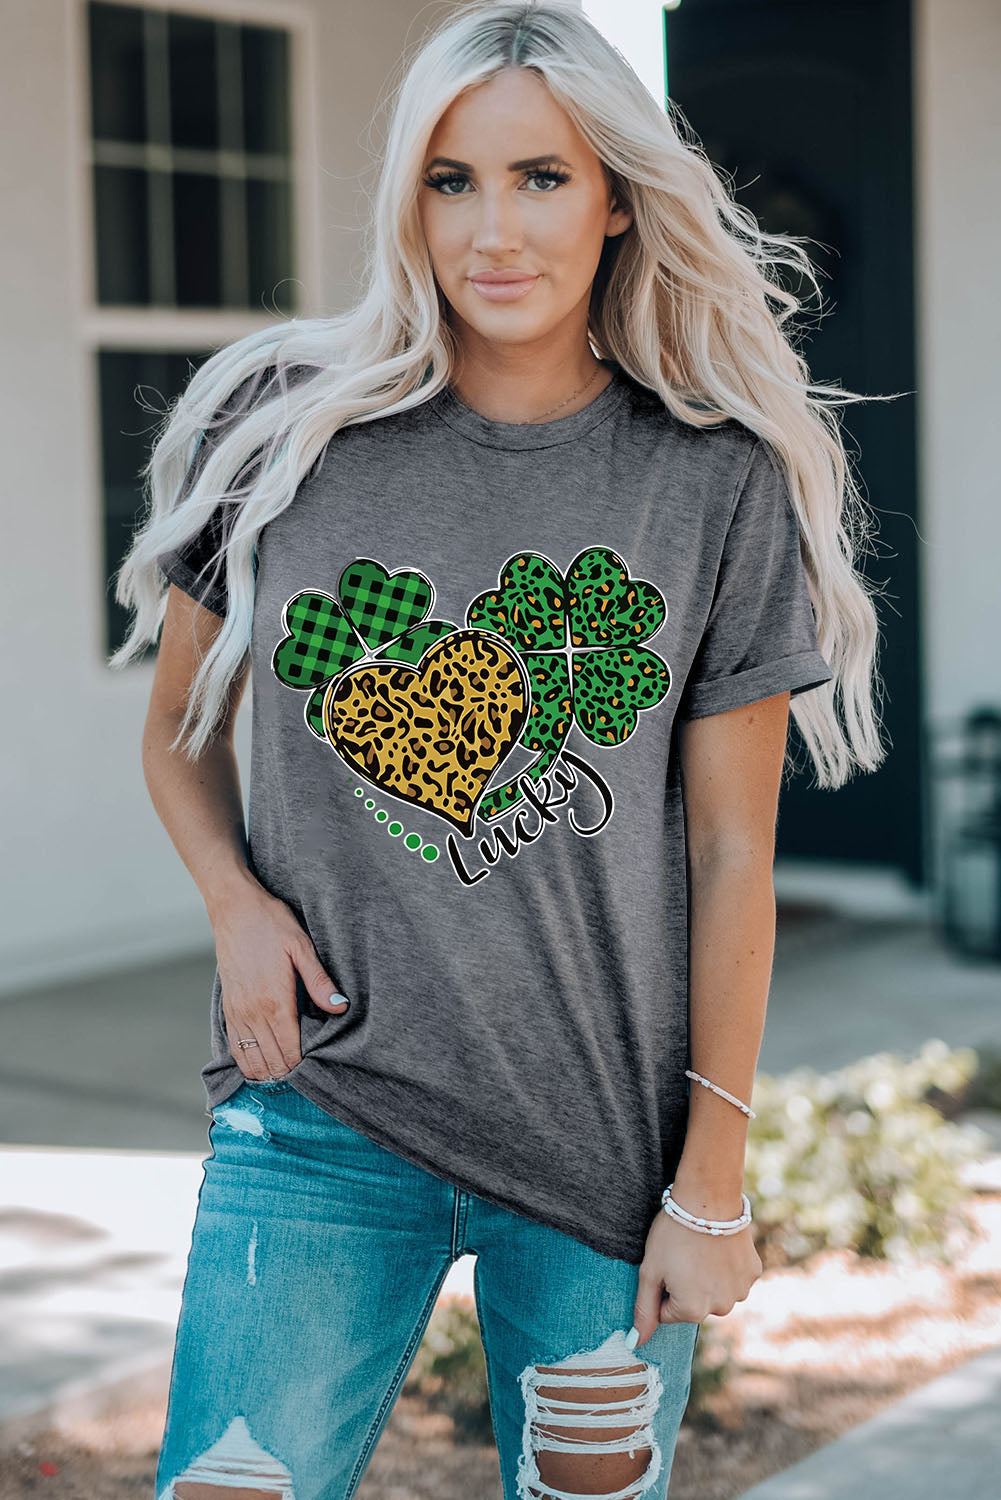 Women's Full Size LUCKY St. Patrick's Graphic Cuffed Short Sleeve Tee Shirt